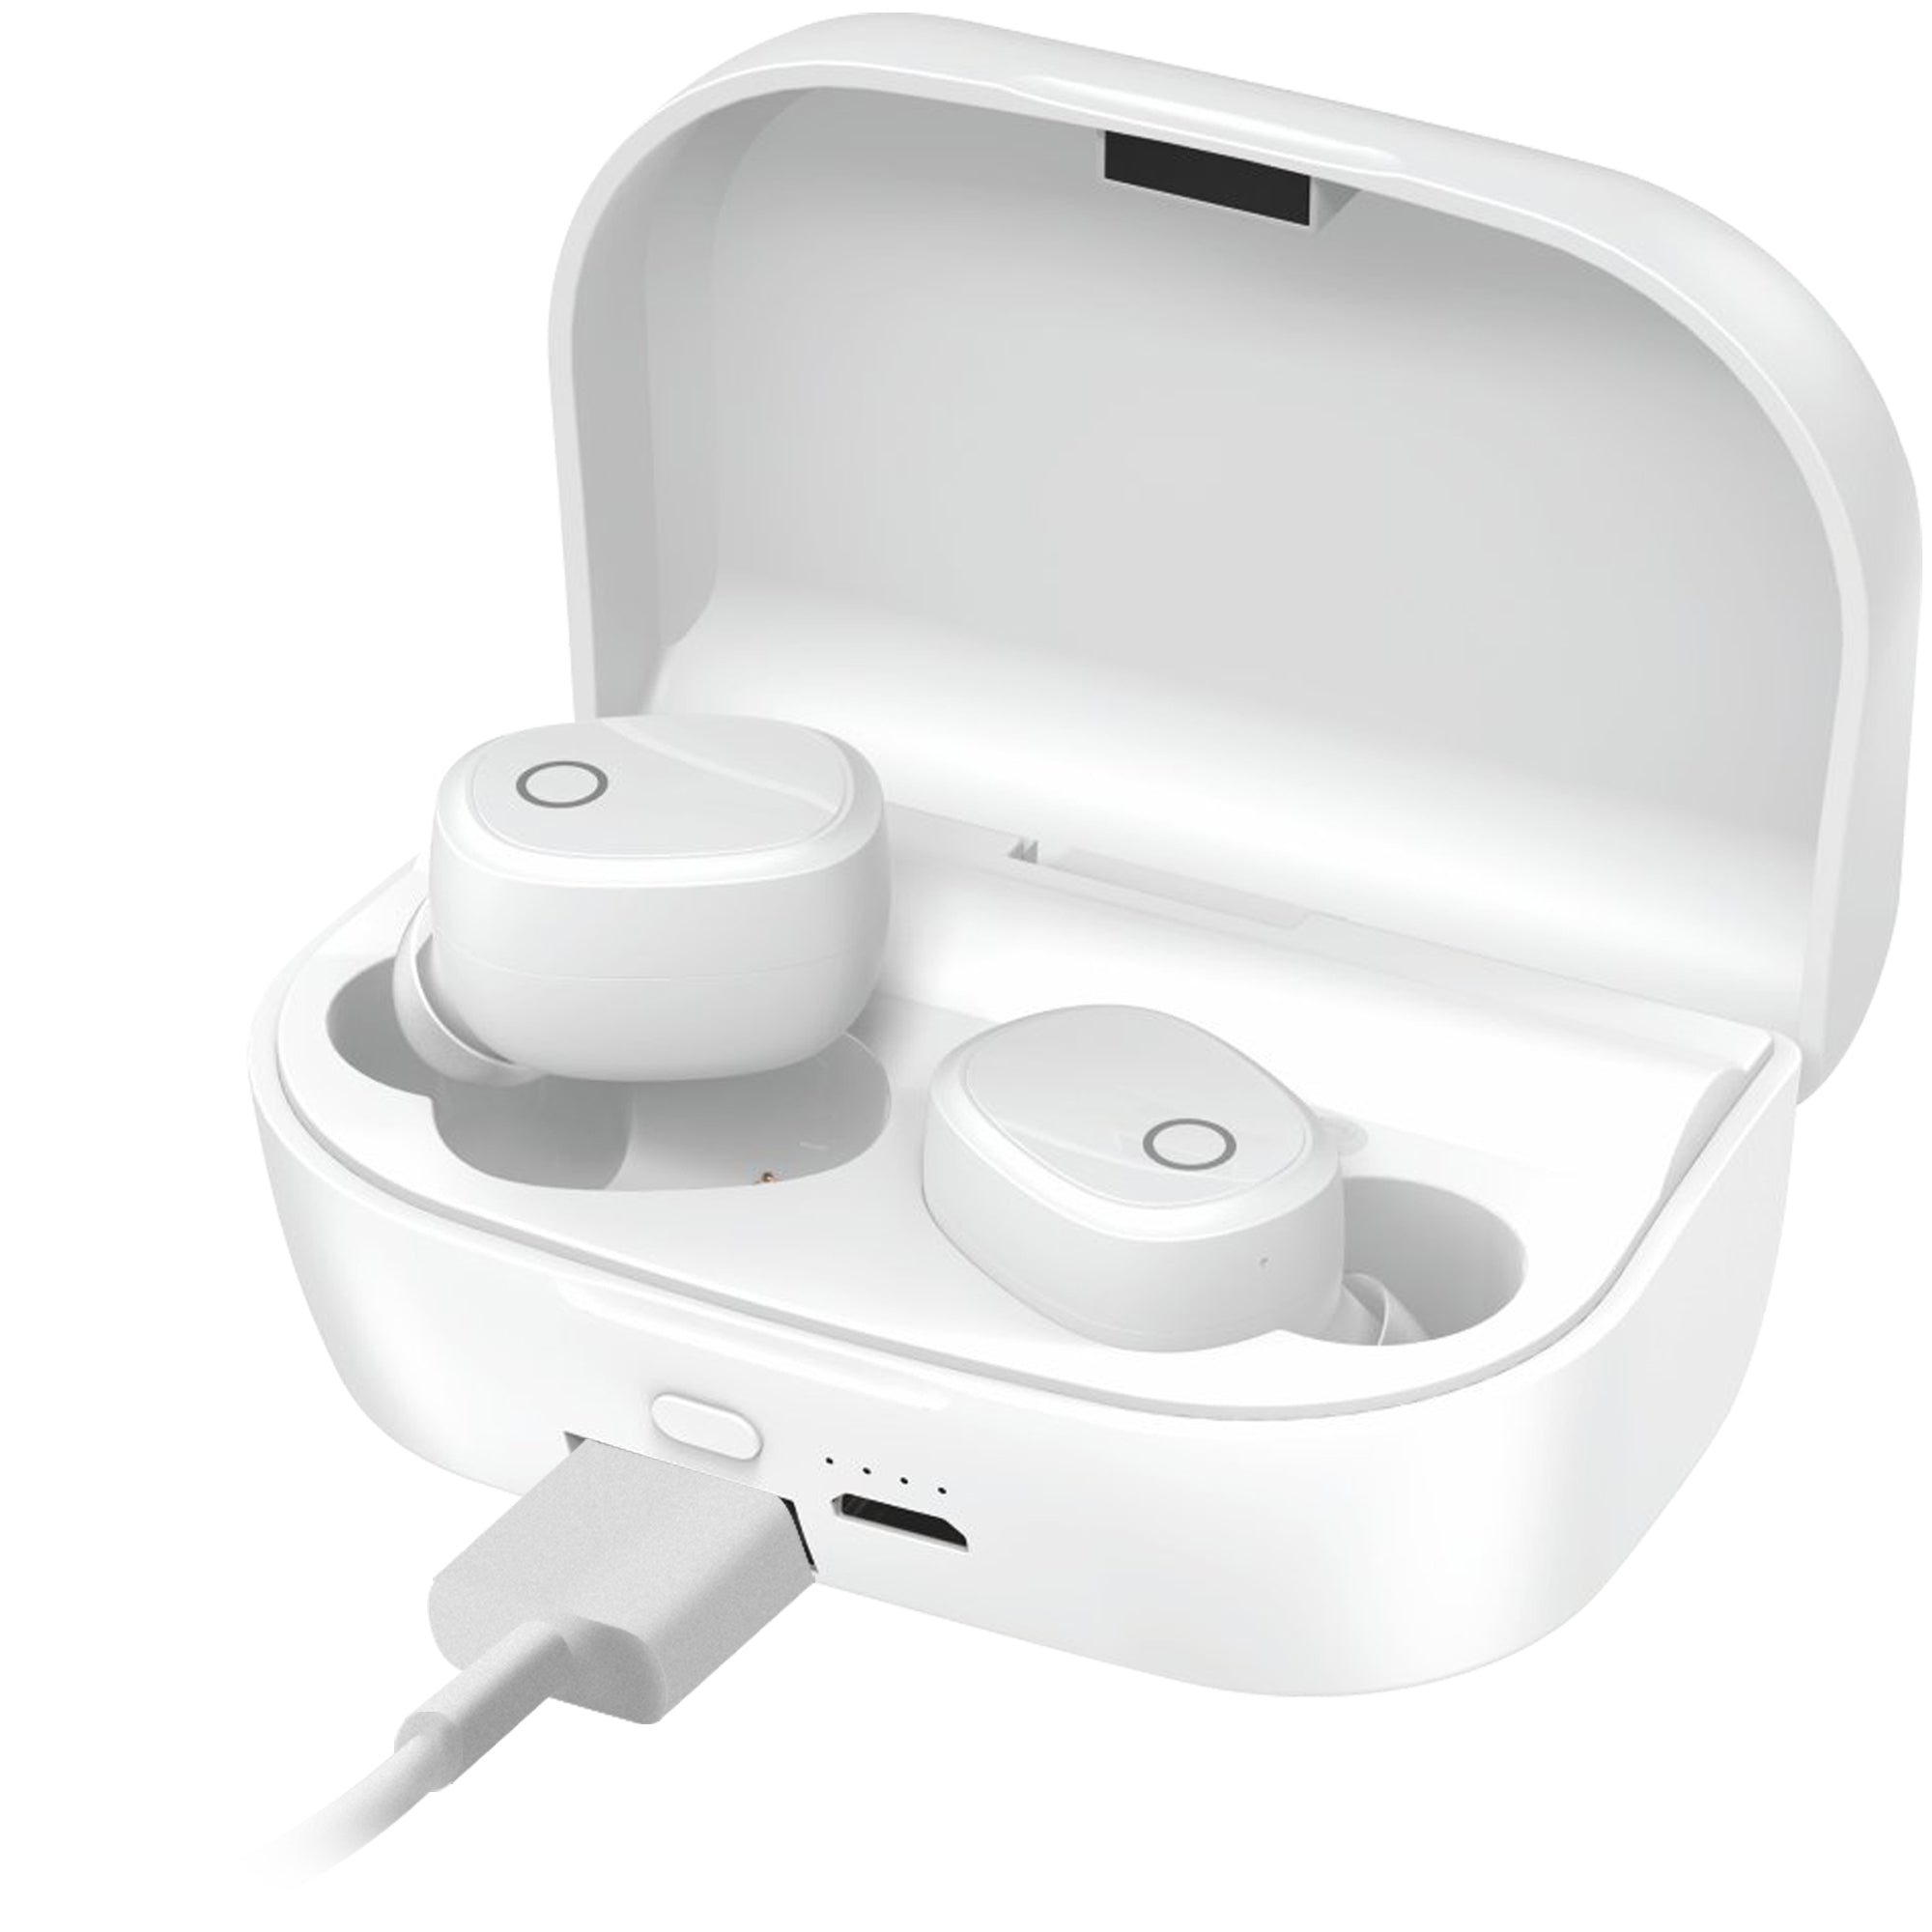 True Wireless Earbuds w/ Power Bank Carrying Case, White